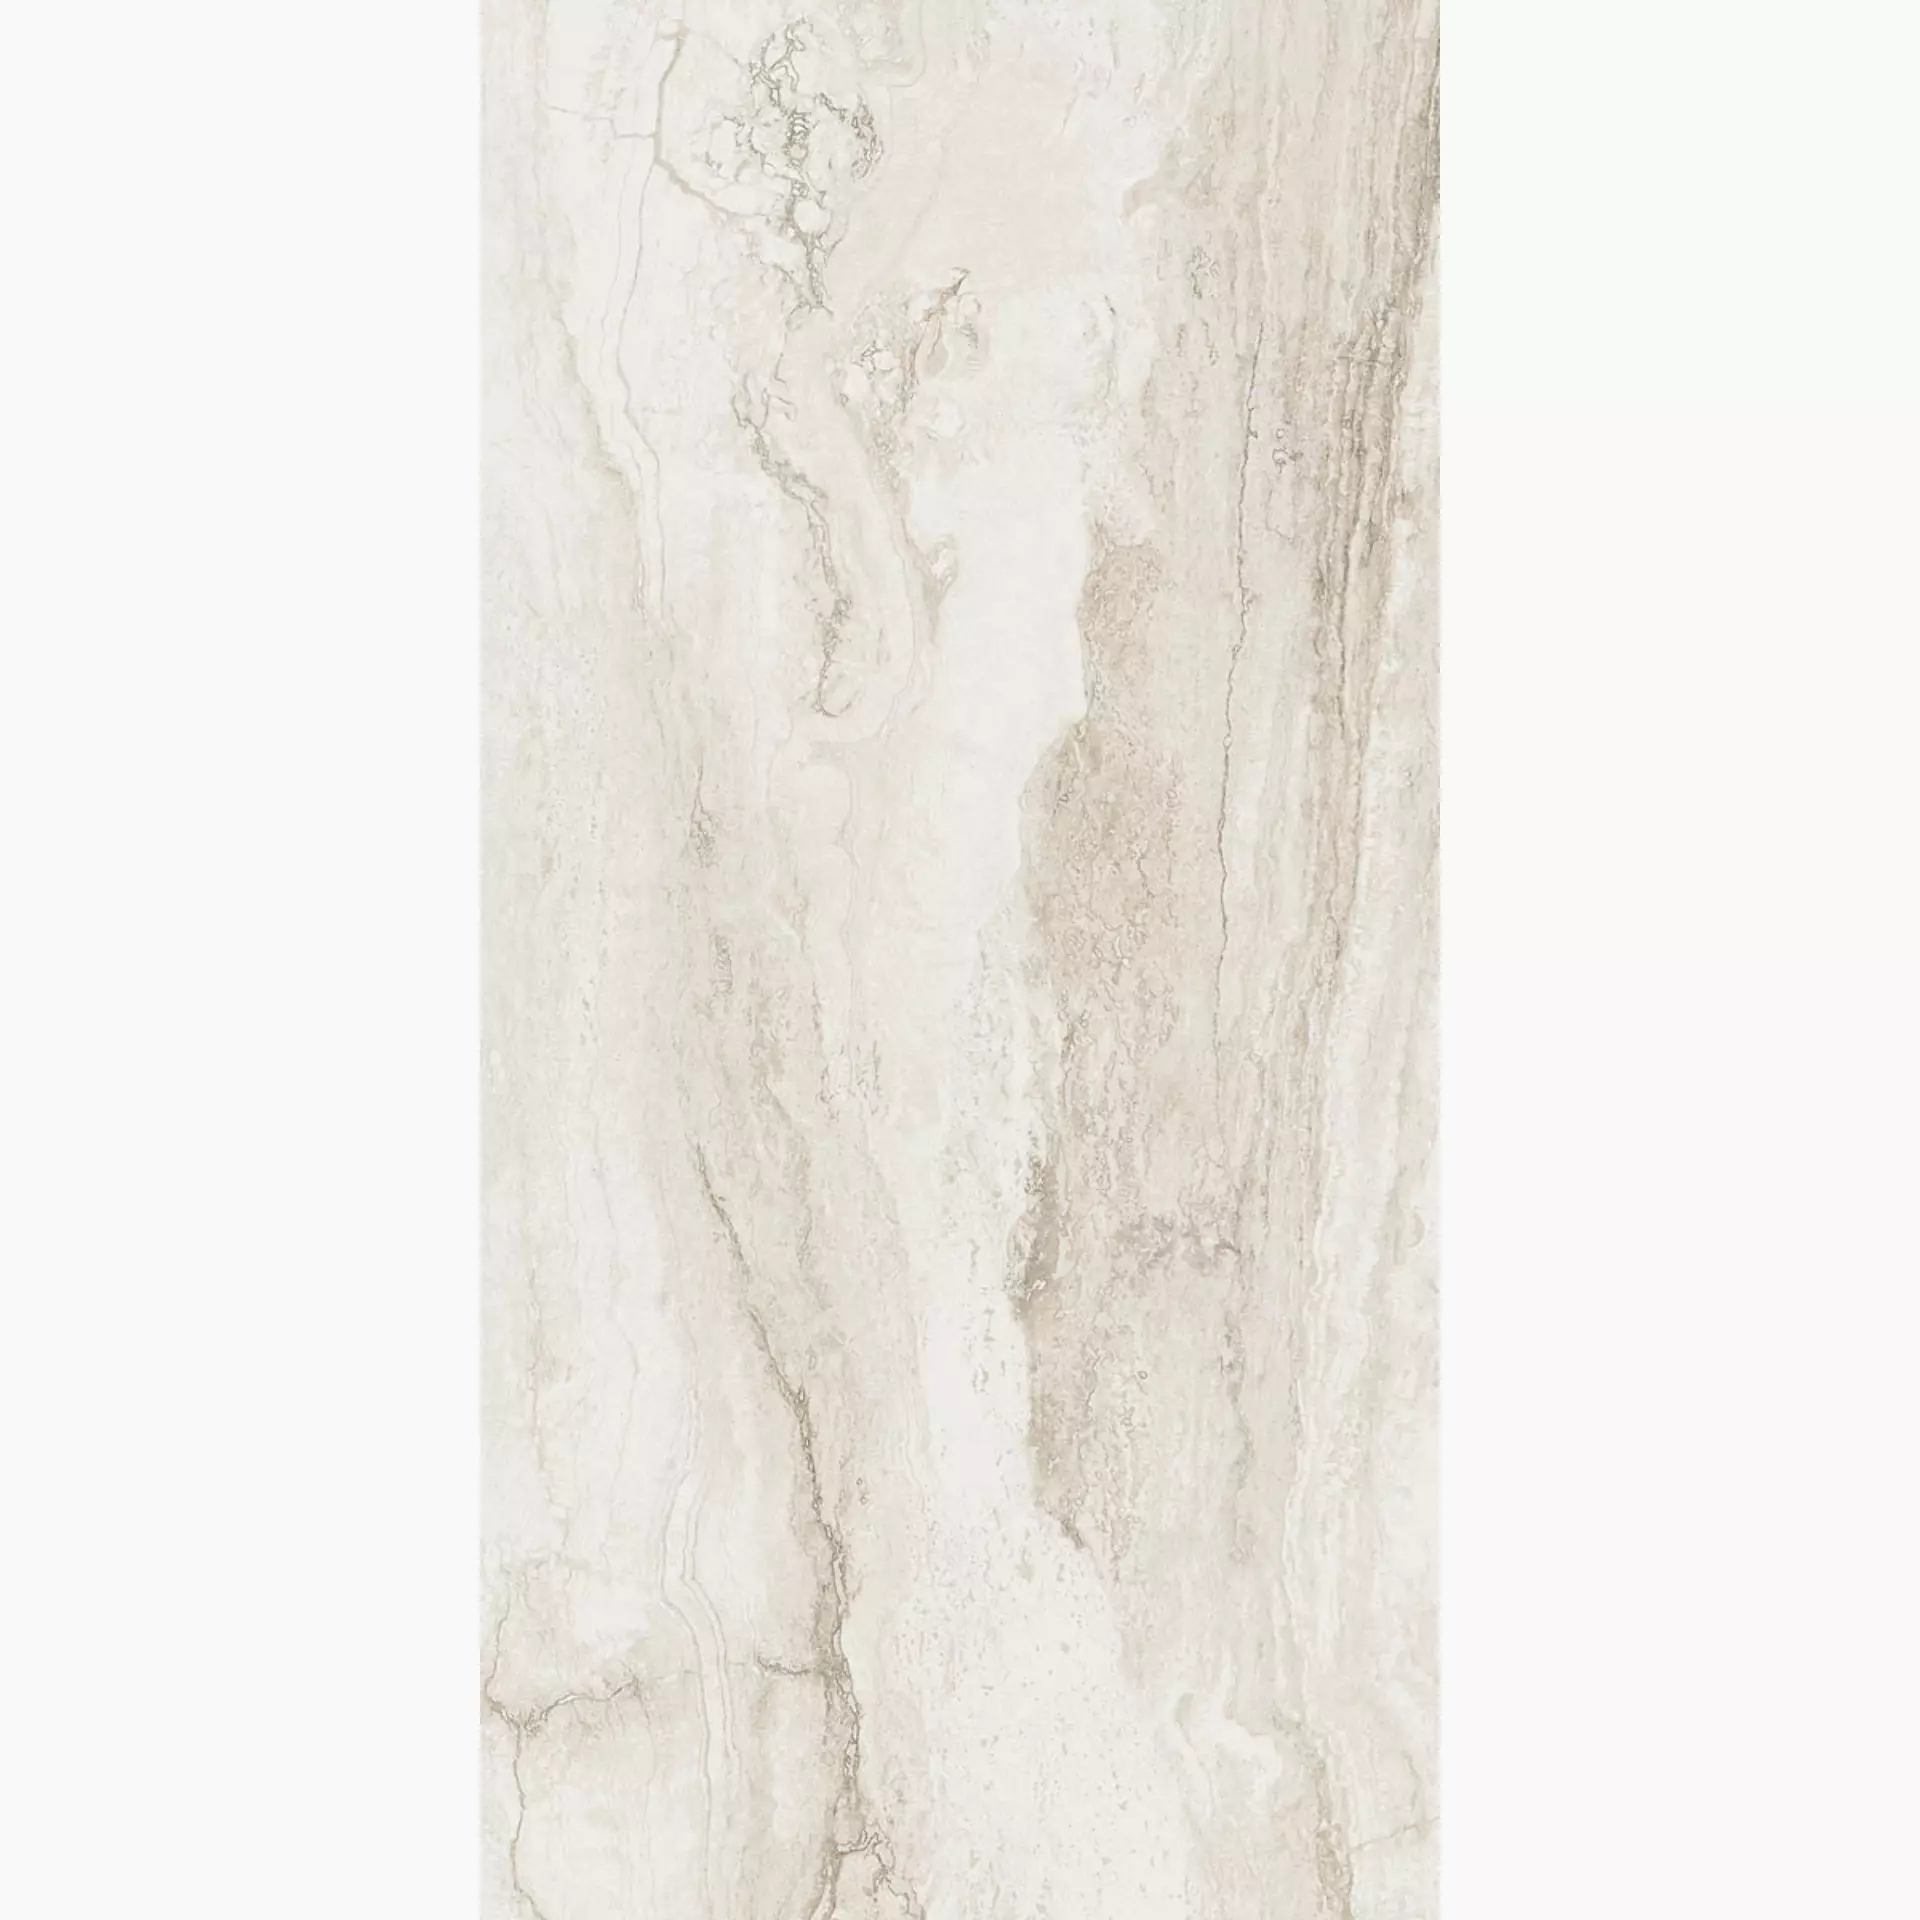 La Faenza Bianco White Honed Flat Glossy 166259 90x180cm rectified 10mm - TRA ON 9018 LP